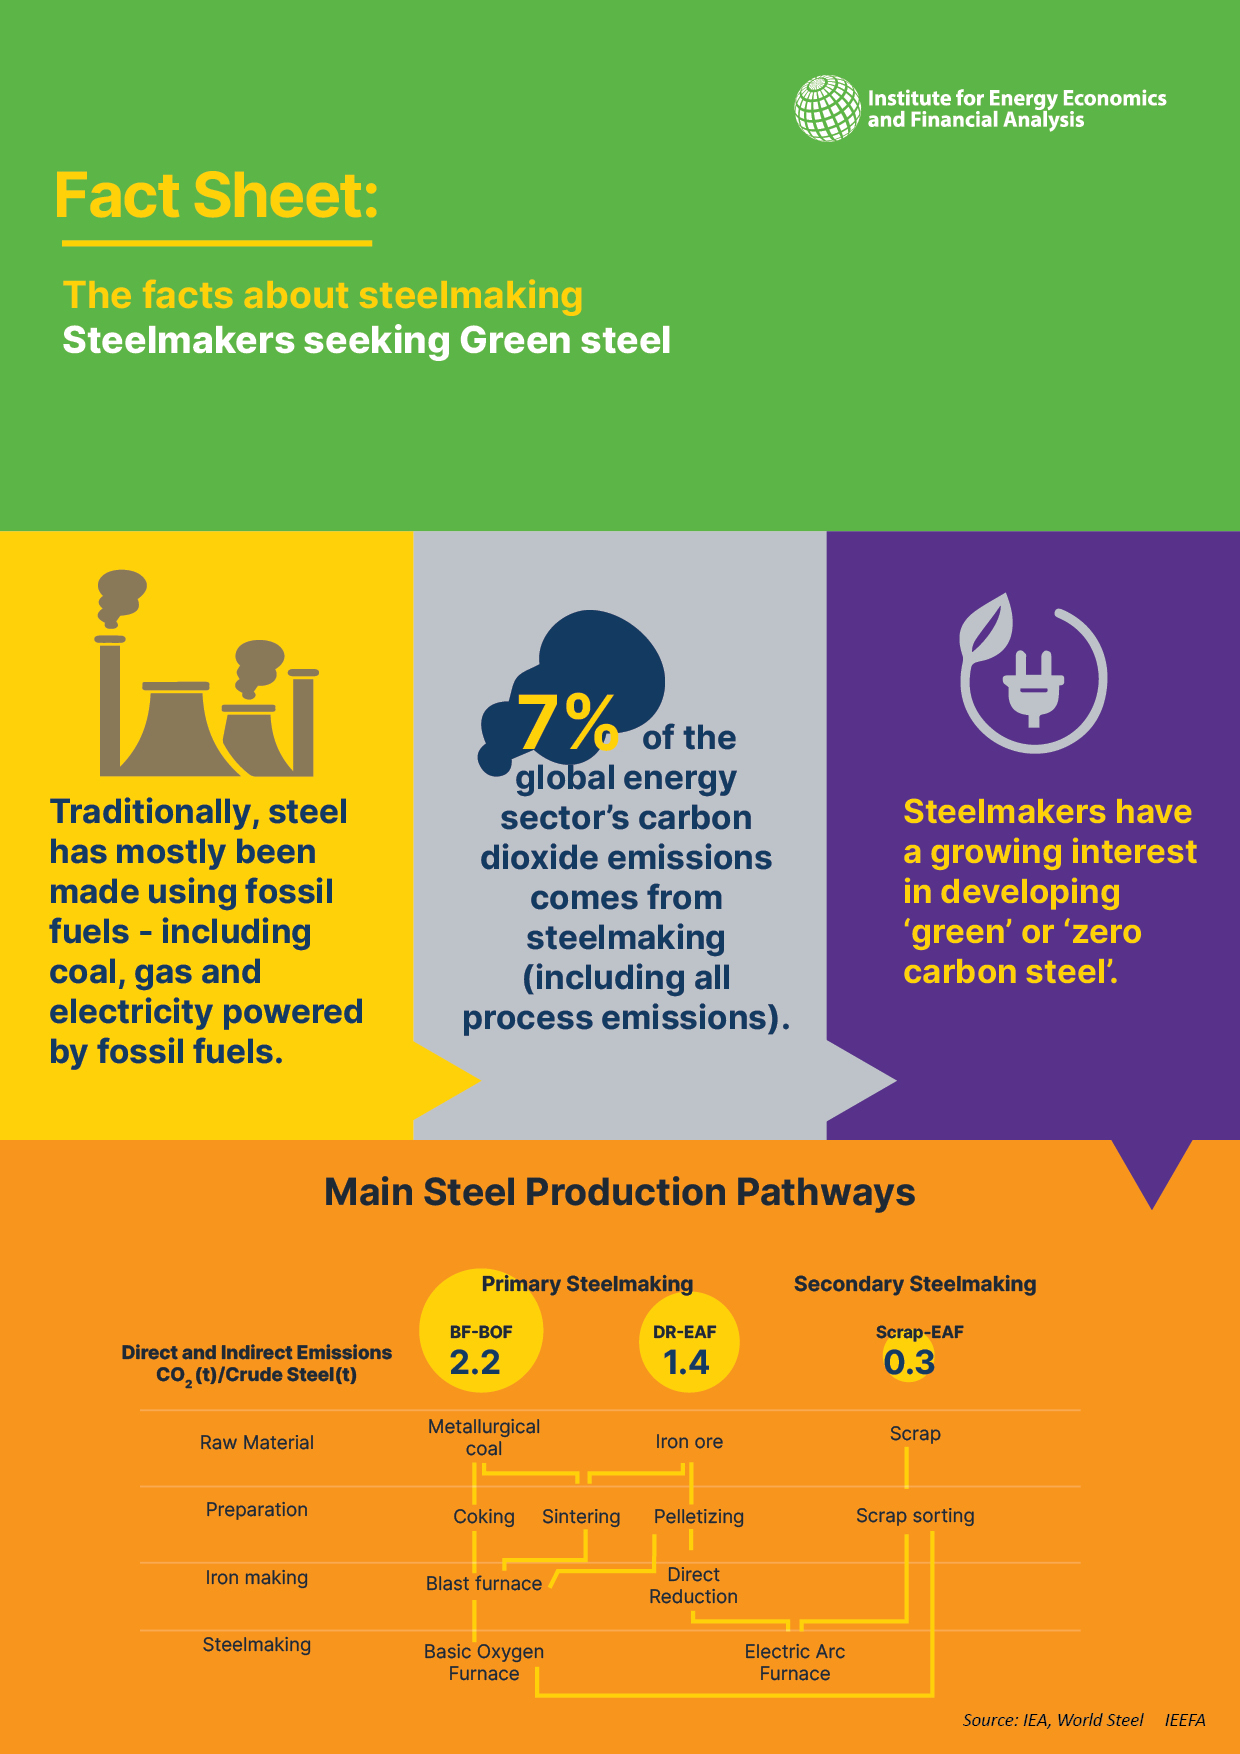 Steelmaking face sheet page 1